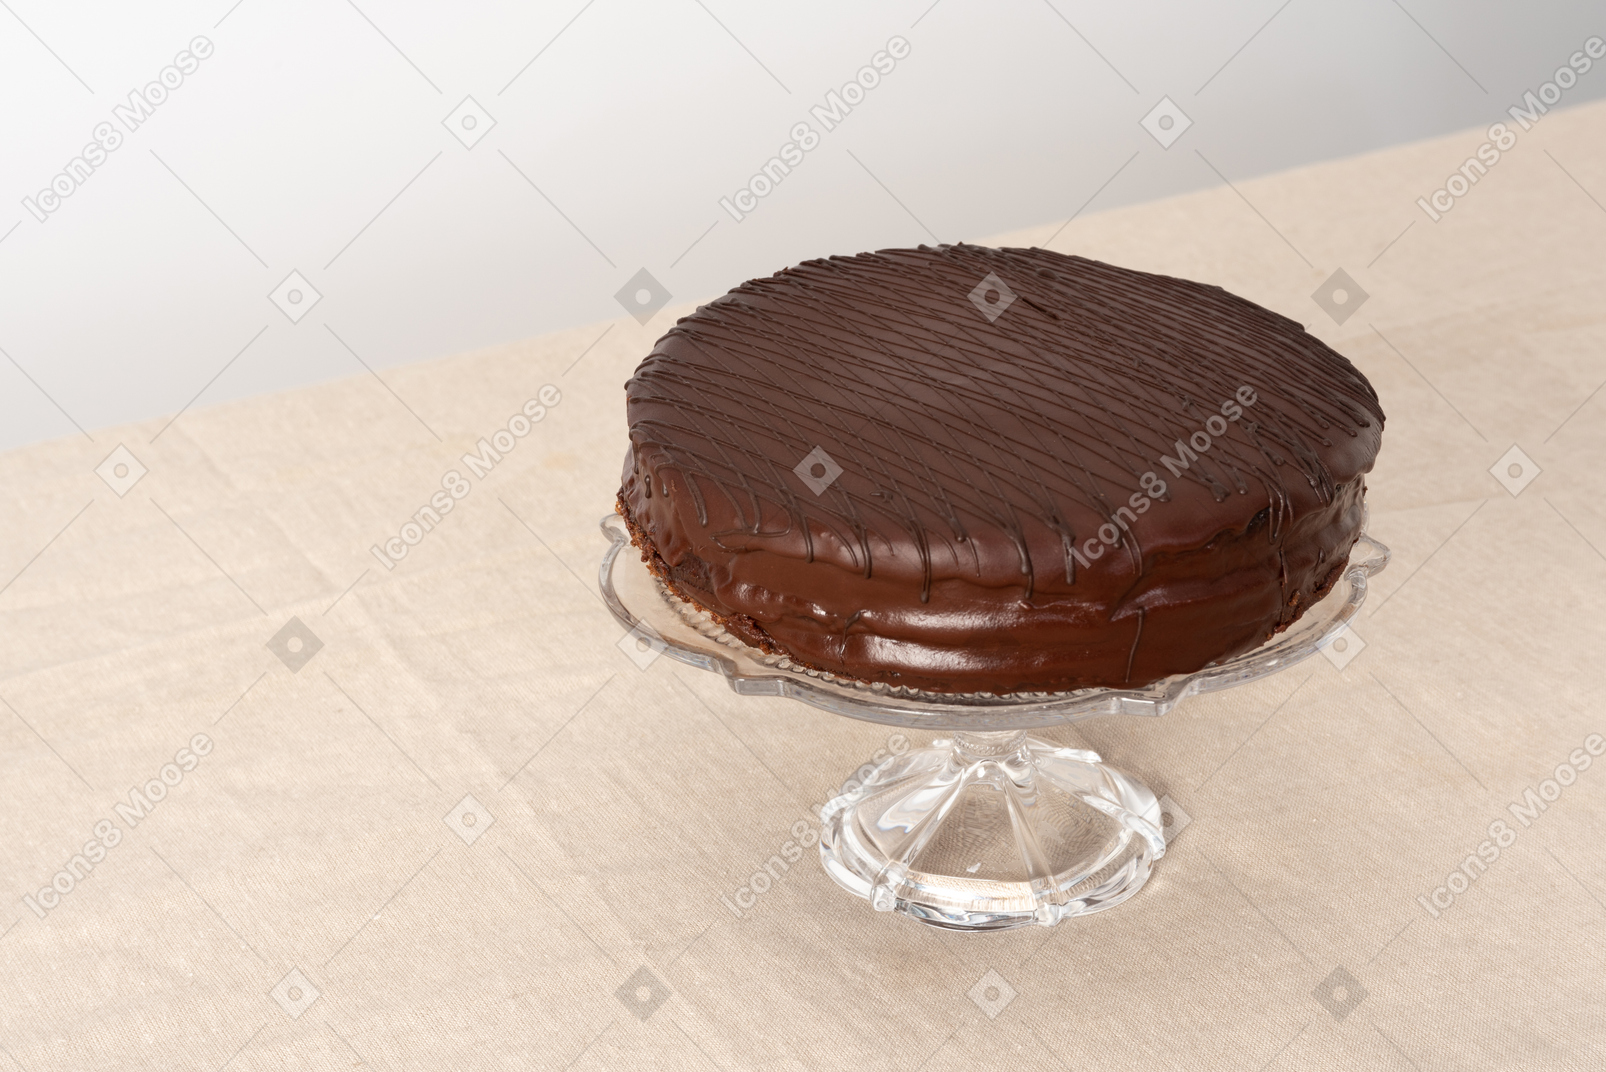 Unbelievable chocolate cake